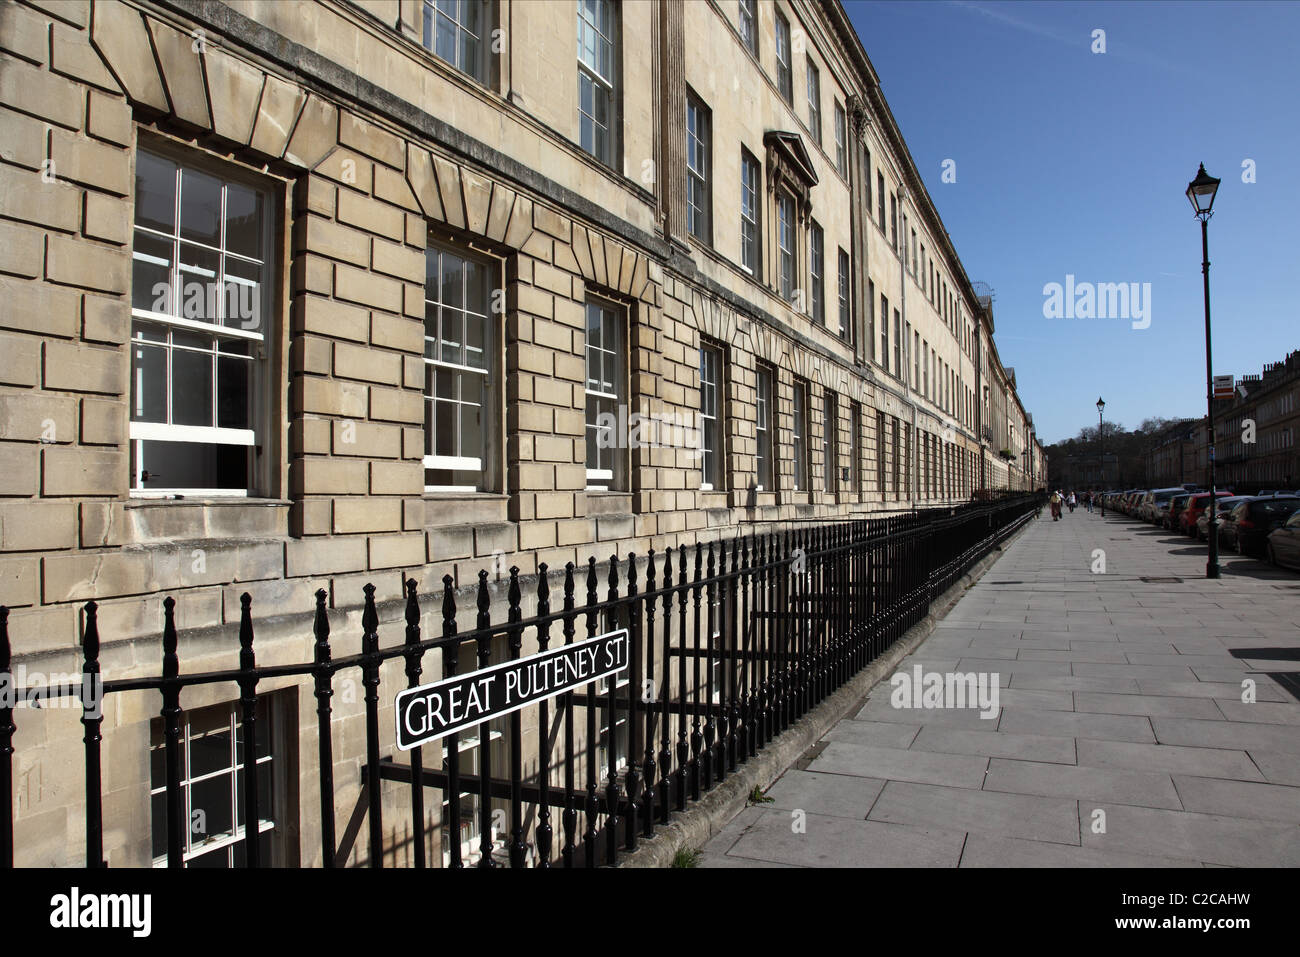 Great Pulteney Street, Bath, England Stock Photo